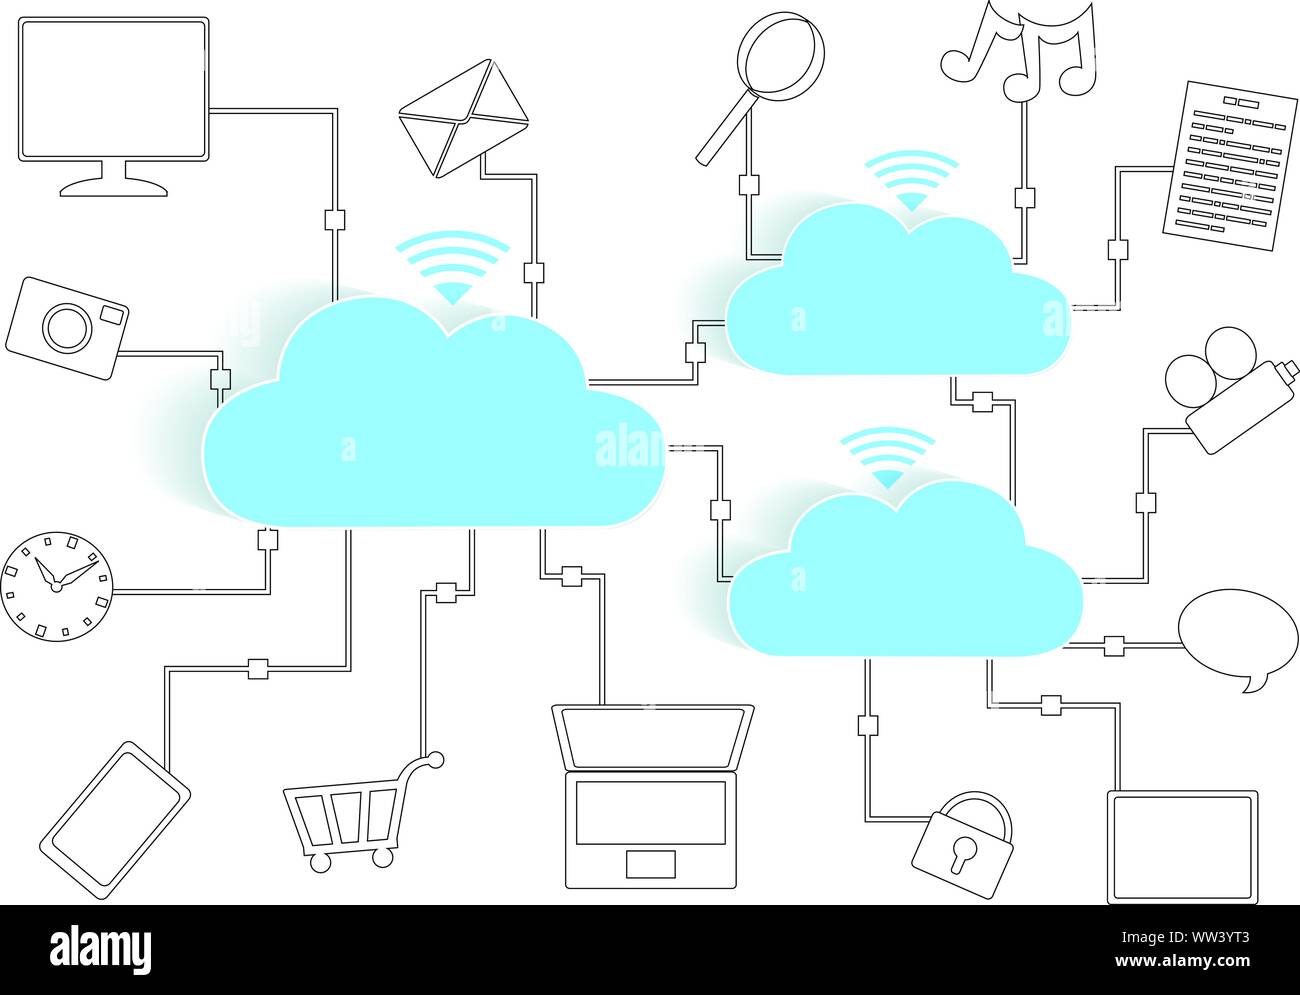 Cloud Computing Papier ausgeschnittene Symbole BYOD Geräte Netzwerk - WLAN-Internetverbindung Konzept, EPS 10 gruppiert und Geschichteten, enthält Mischungen Stock Vektor